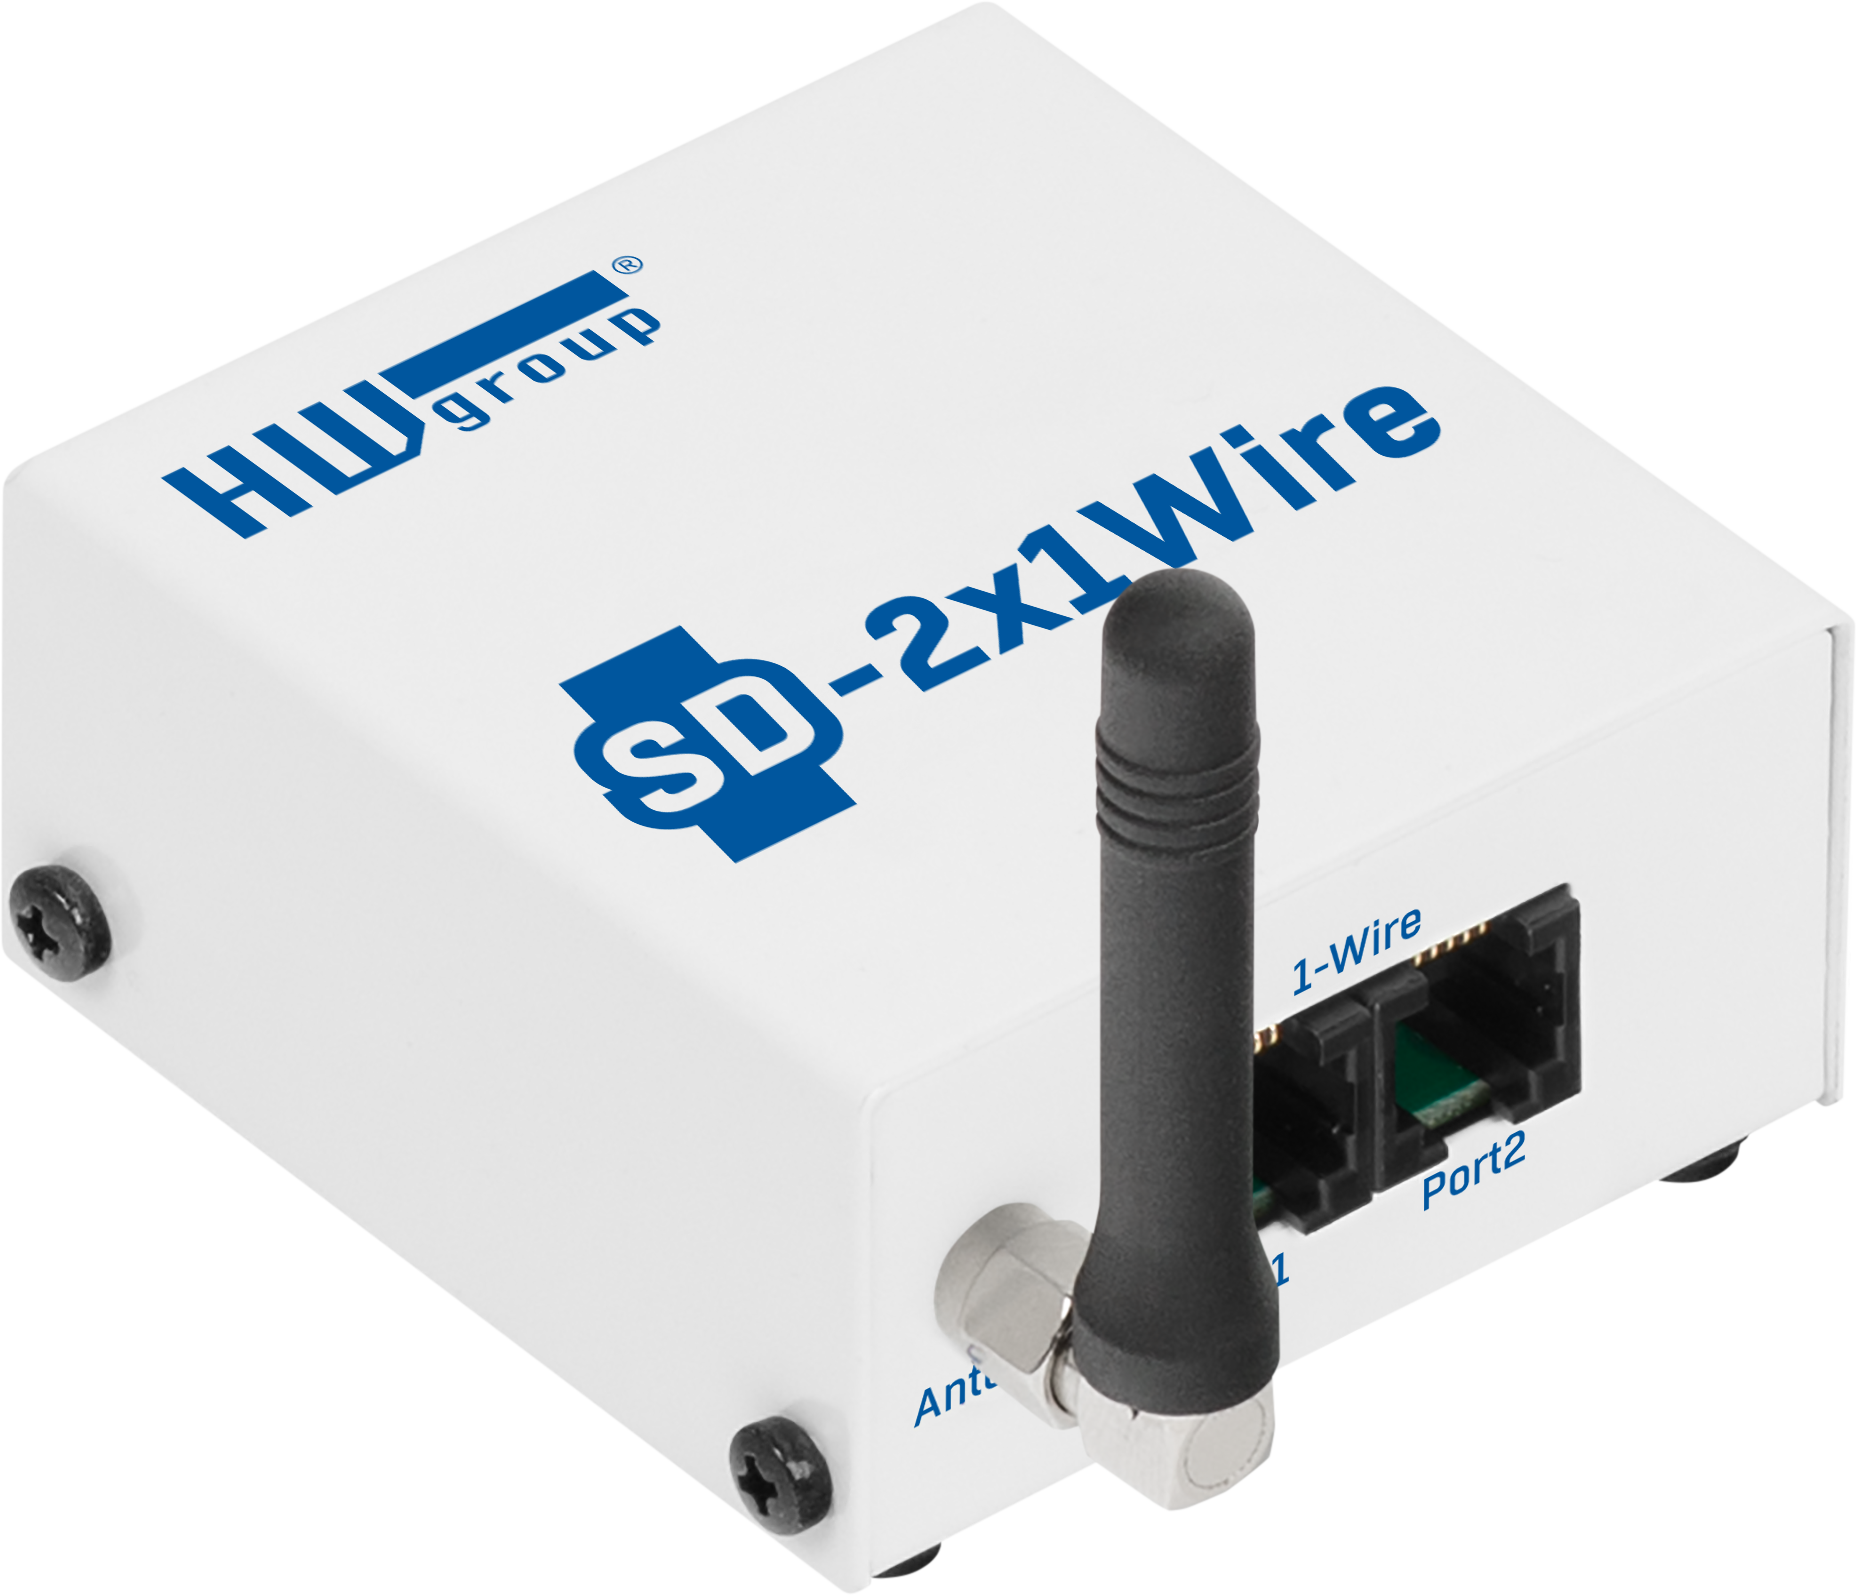 HWg SD 2x1Wire SensDesk monitoring Tset | Sensor Monitoring | Product | MCS